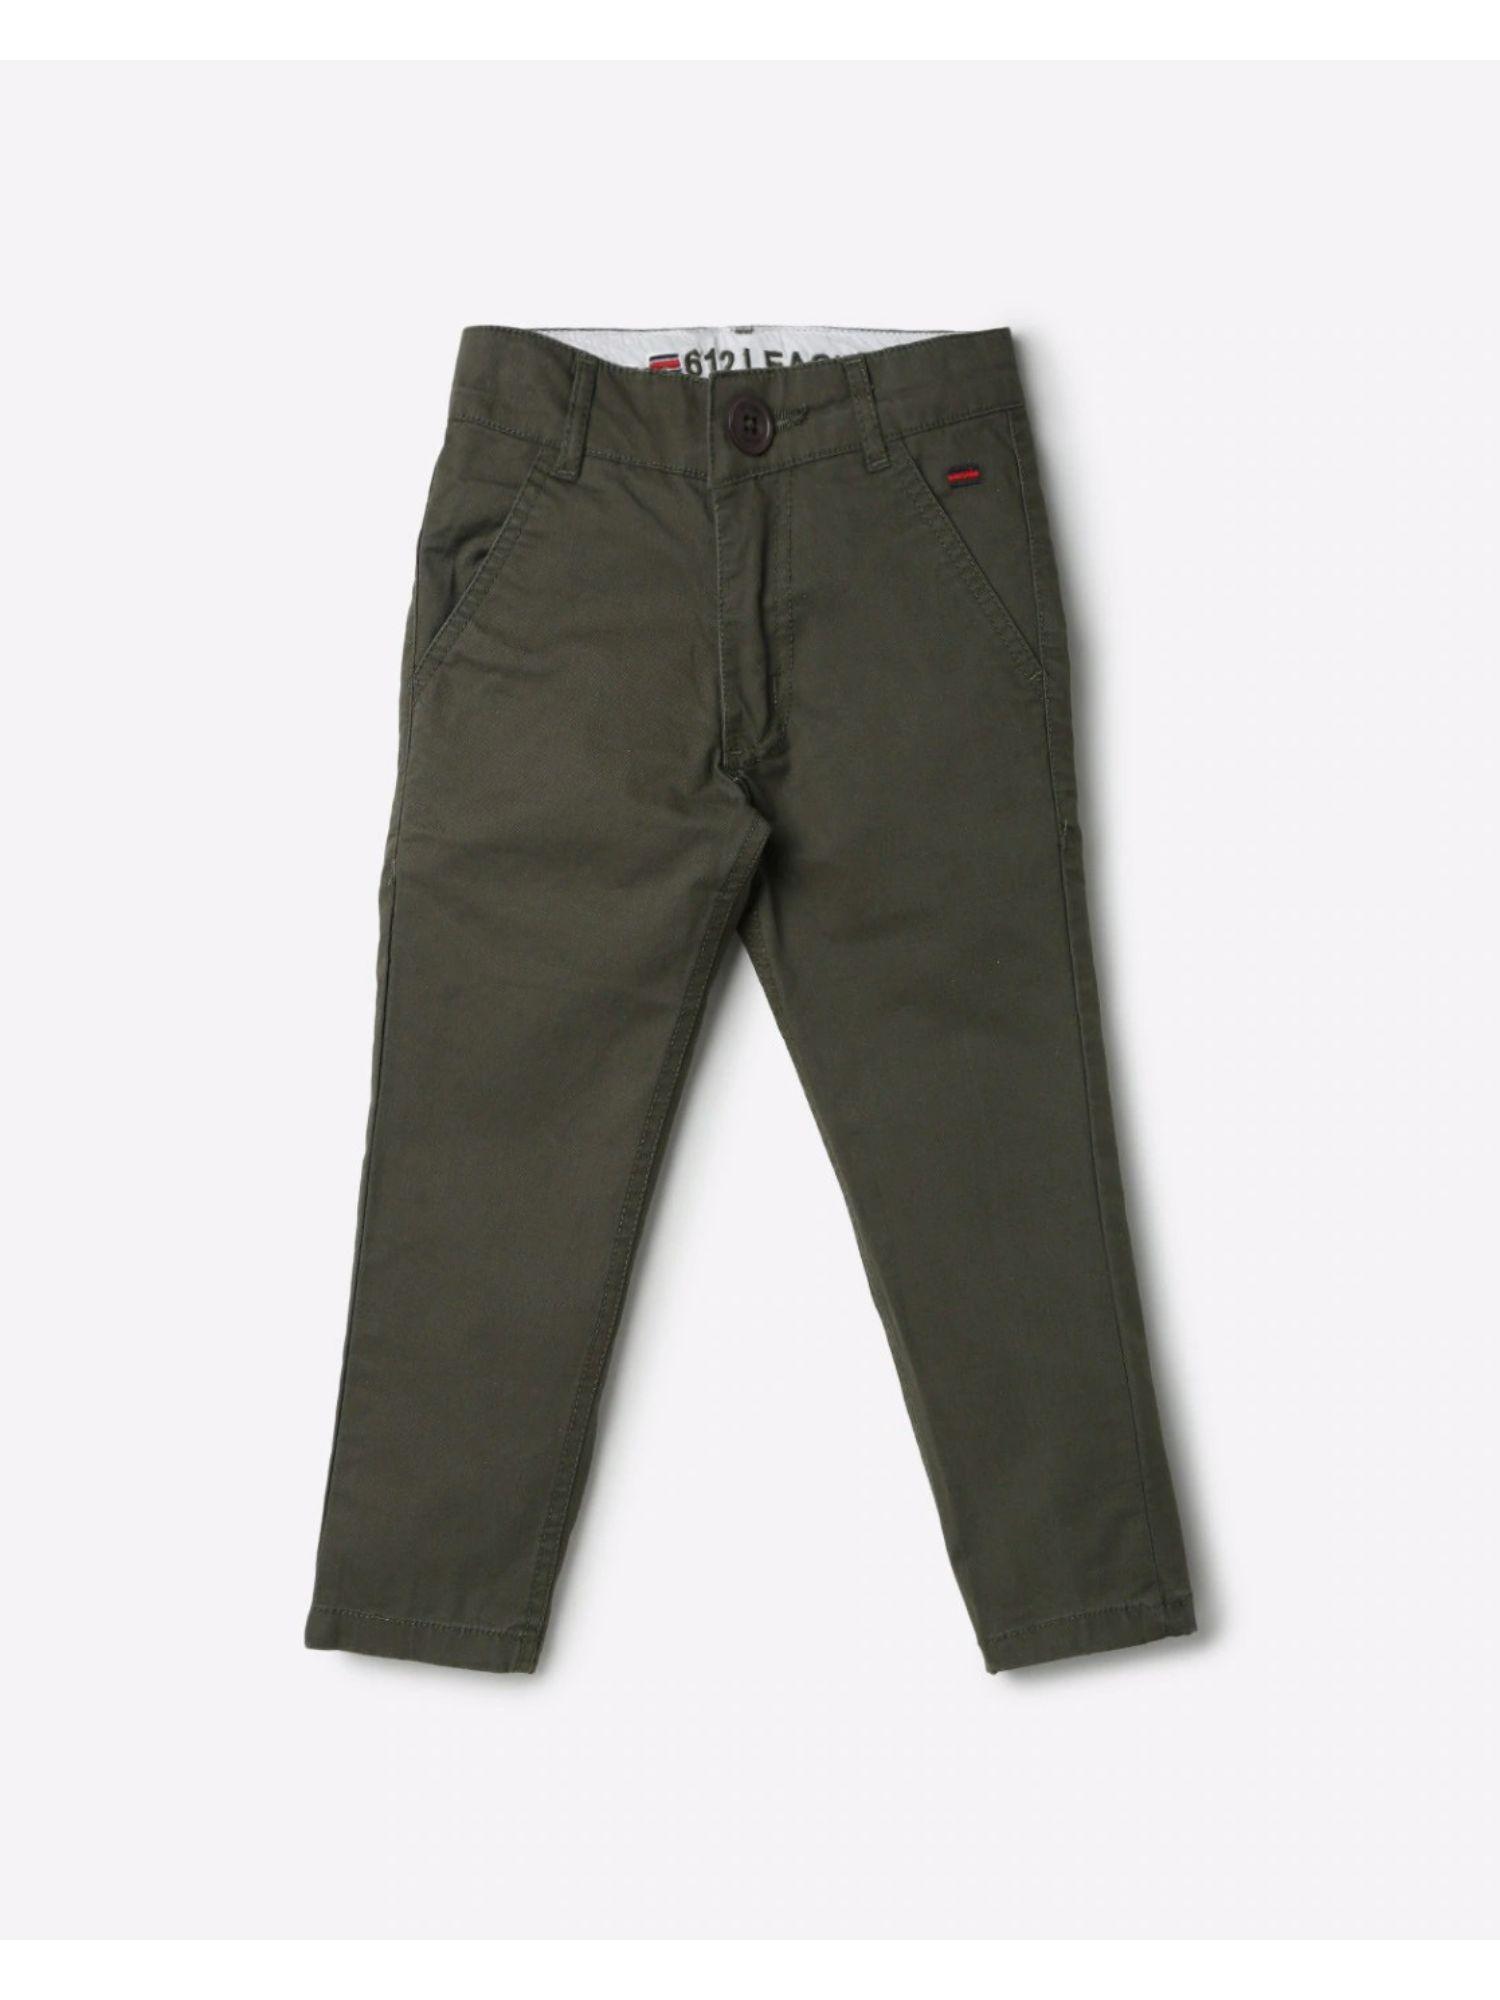 boy's pants in olive color